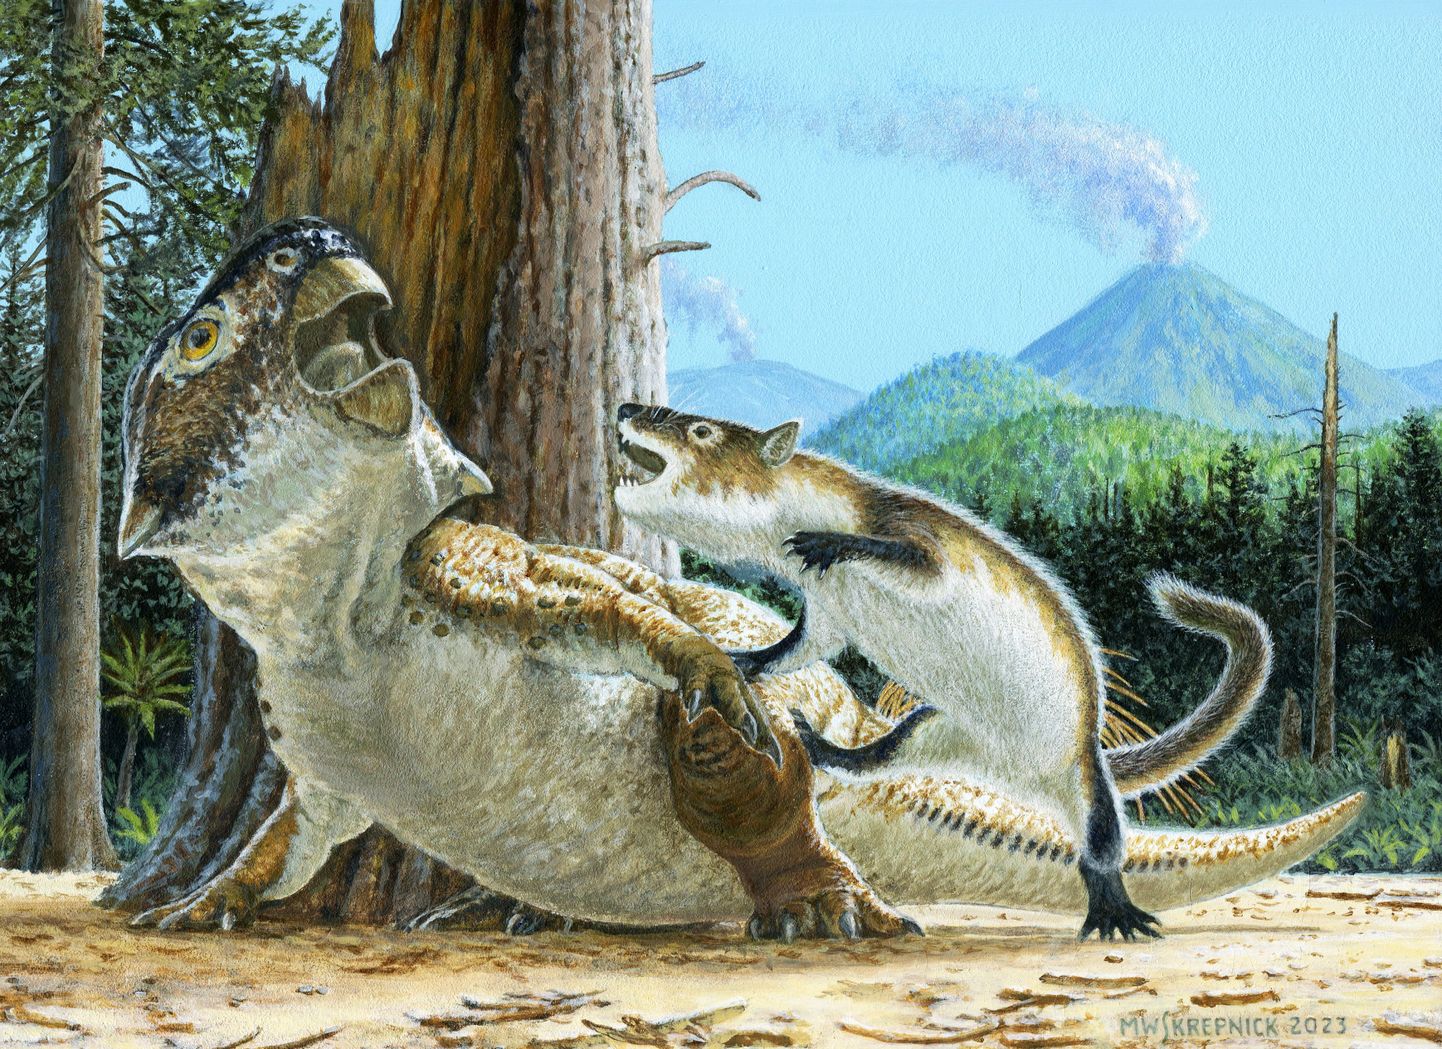 Kunstniku illustratsioon lihasööja imetaja Repenomamus robustus ja taimetoitlasest dinosauruse Psittacosaurus lujiatunensis ürgsest kokkupuutest.